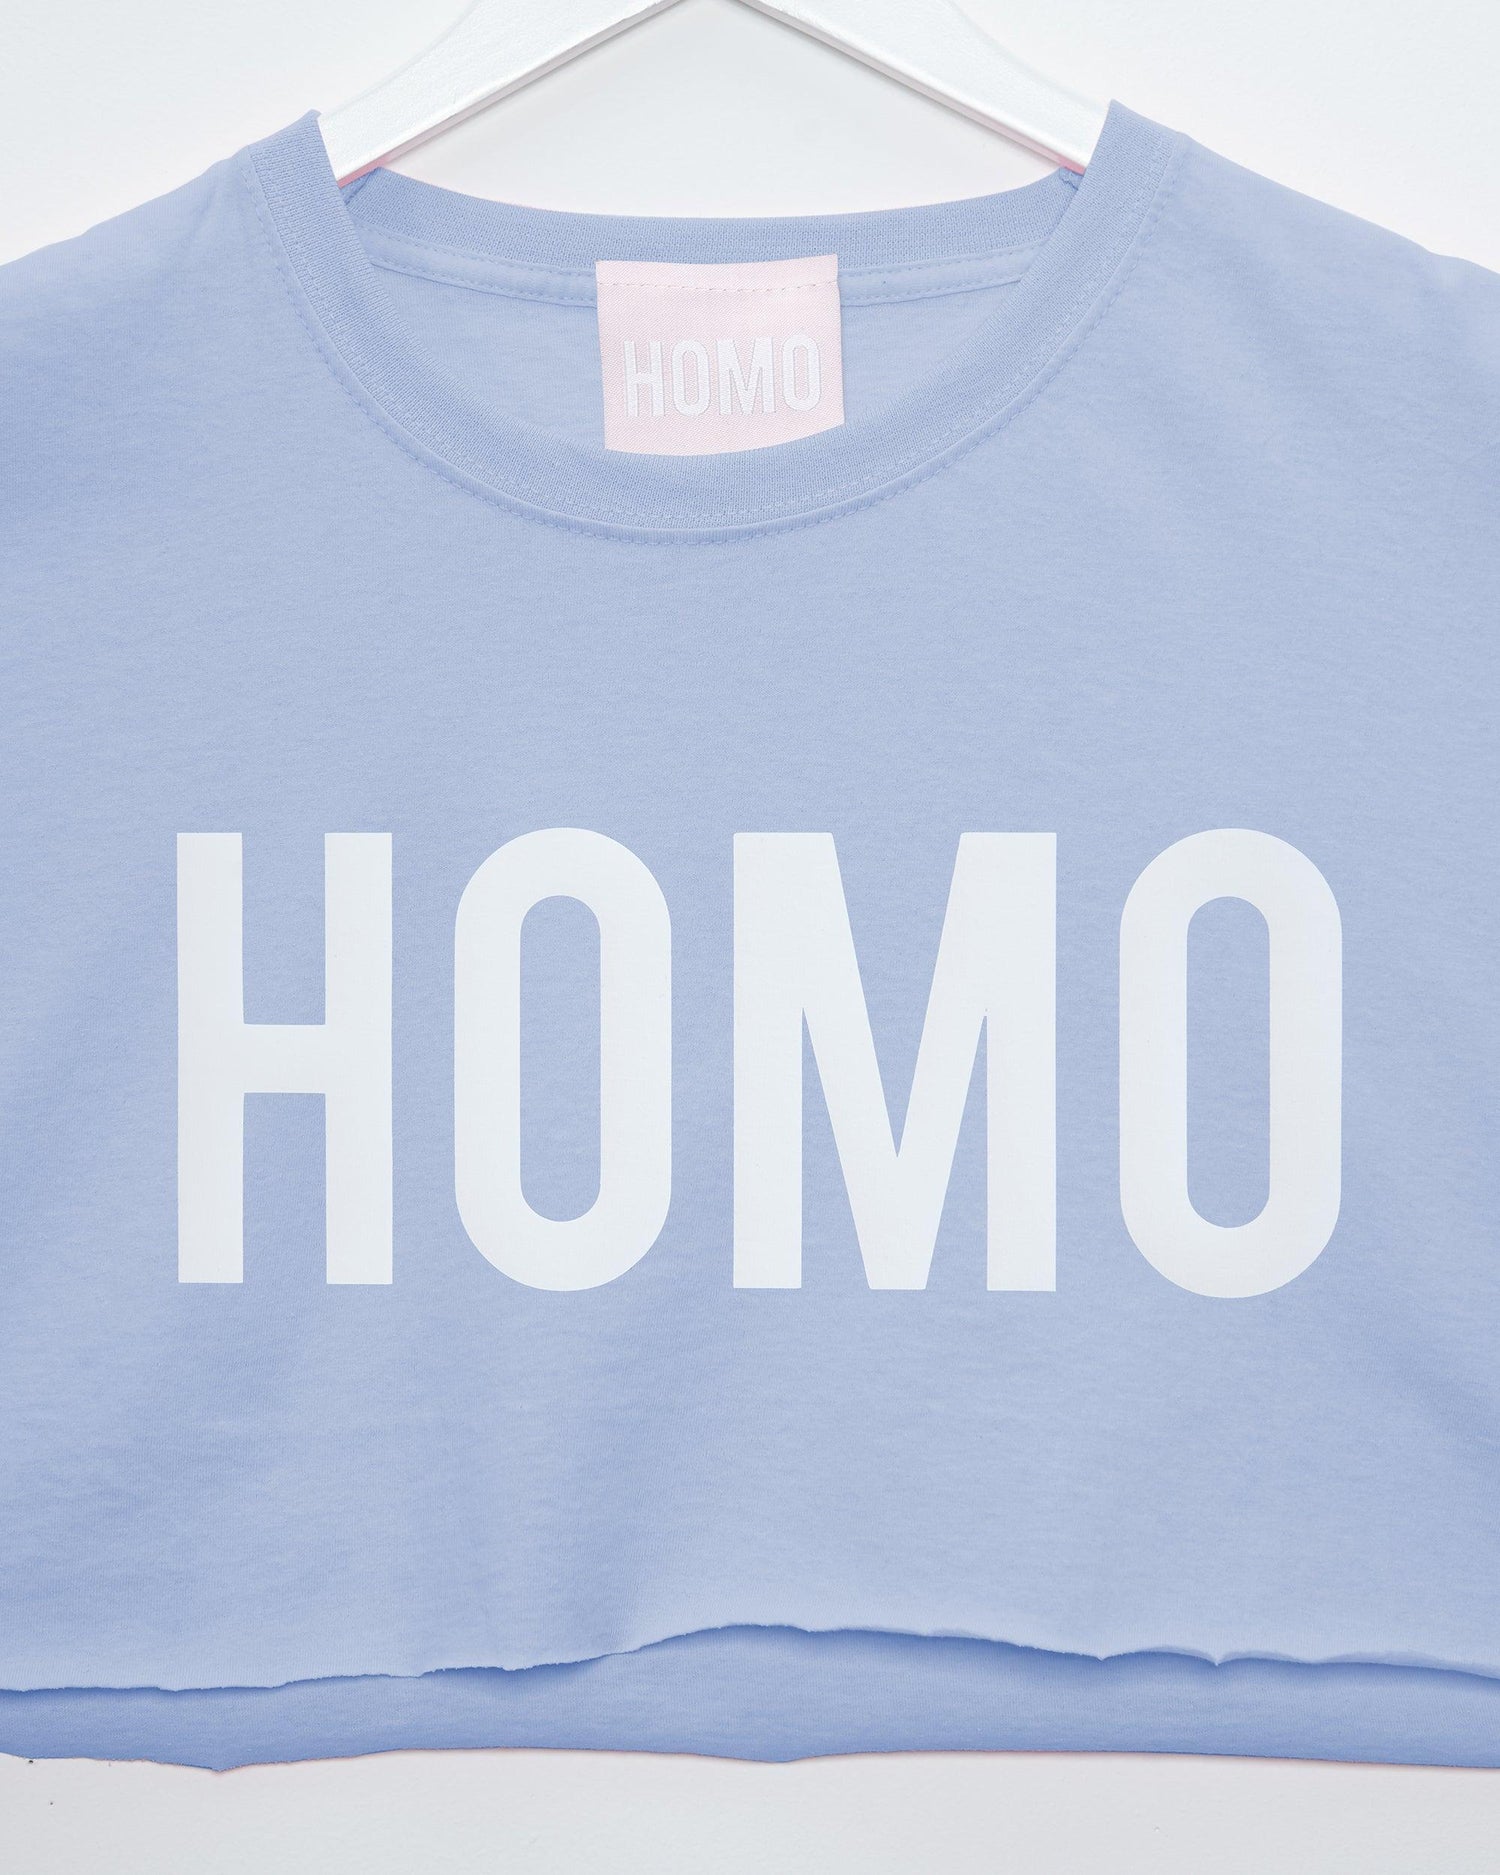 HOMO, mens sleeveless crop top - White on light Blue. - HOMOLONDON